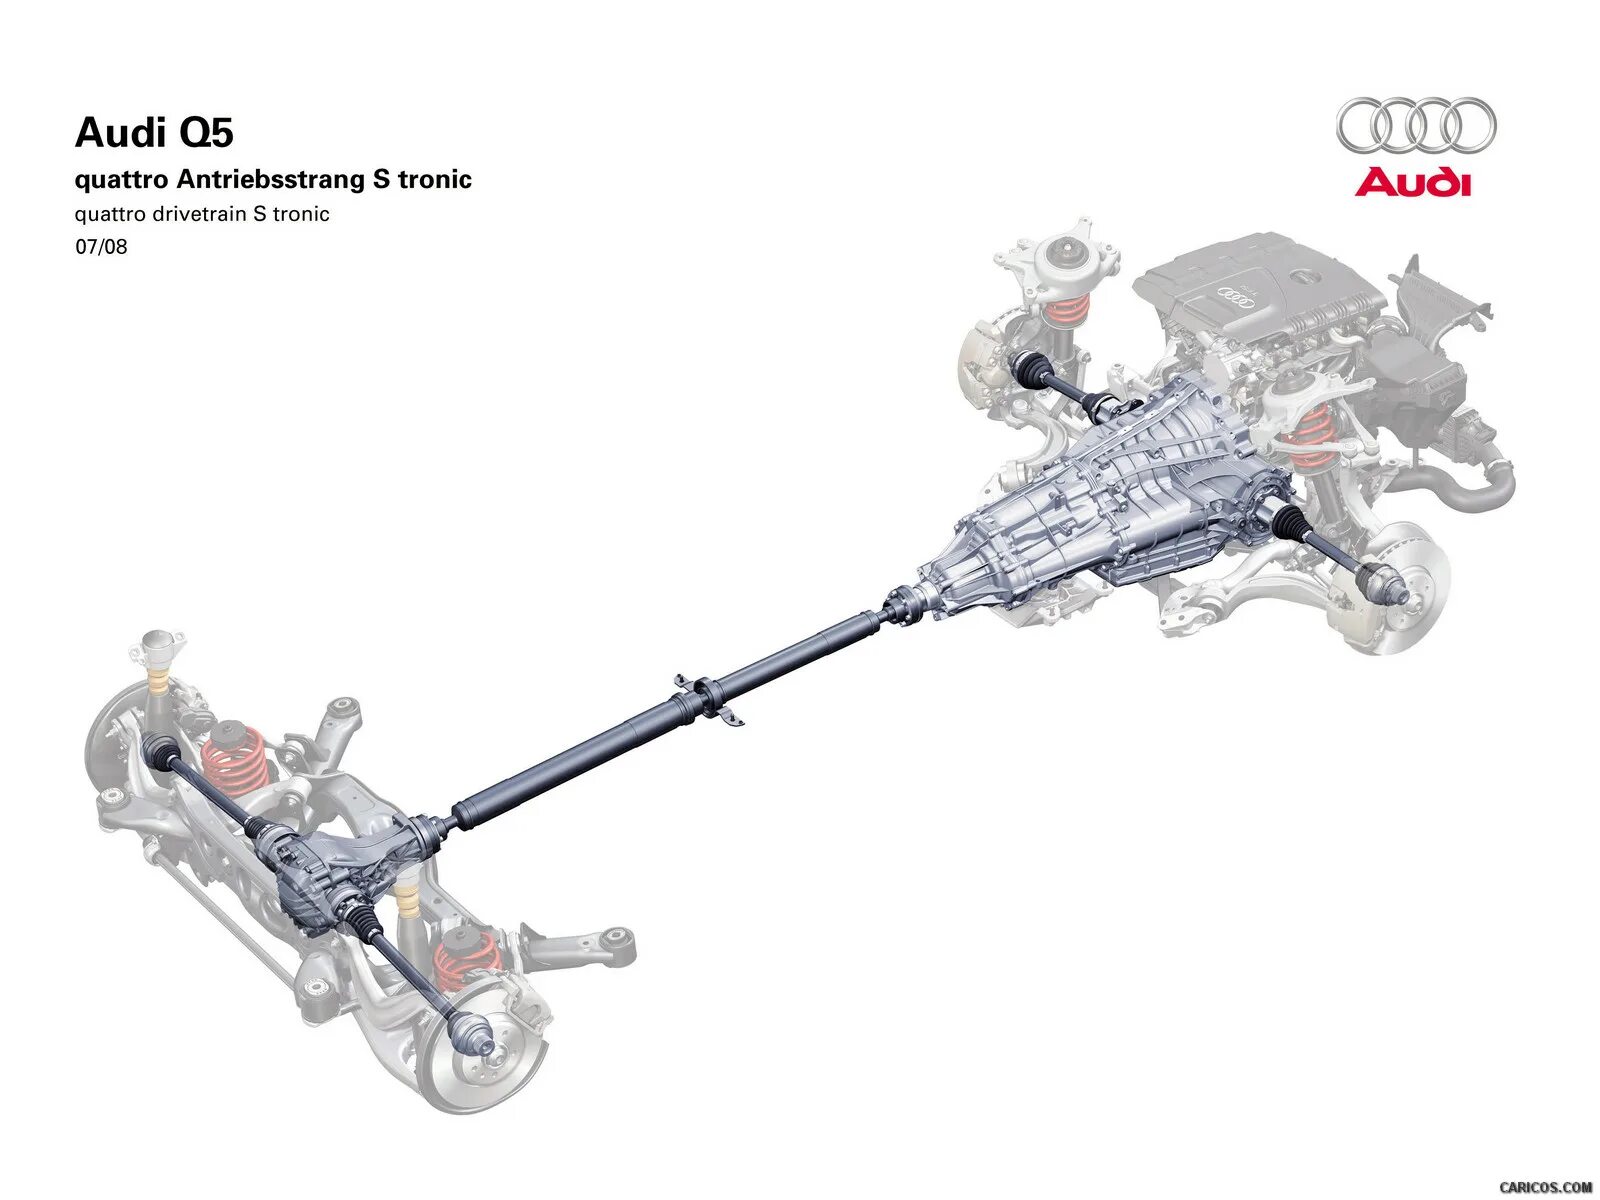 Ауди а6 передний привод. Трансмиссия q5 кватро. Audi q5 1 поколения трансмиссия. Полный привод Audi q5. Схема трансмиссии Audi q5.